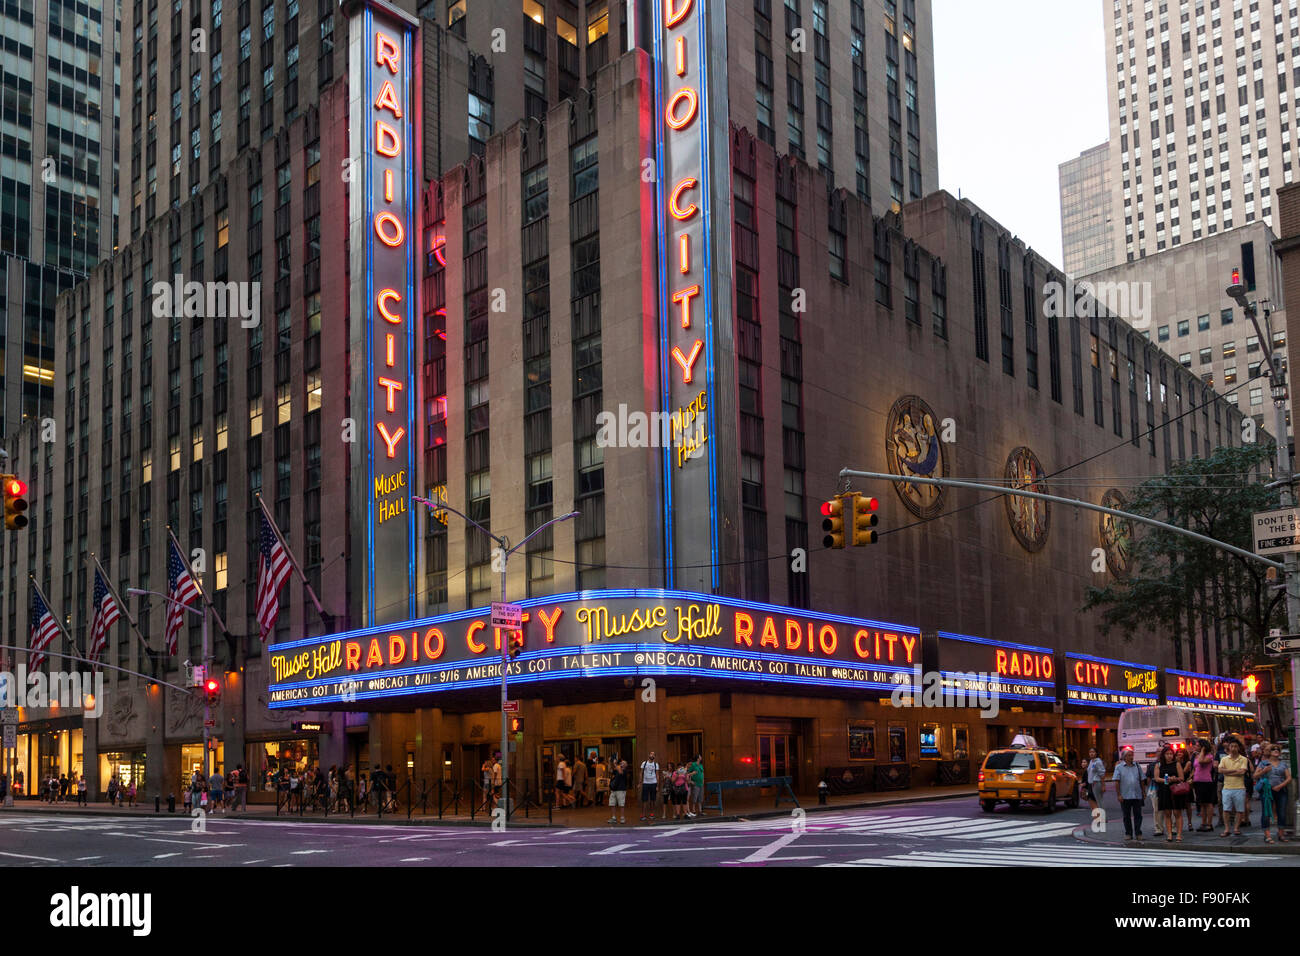 Radio City Music Hall, Manhattan, New York City, USA Banque D'Images